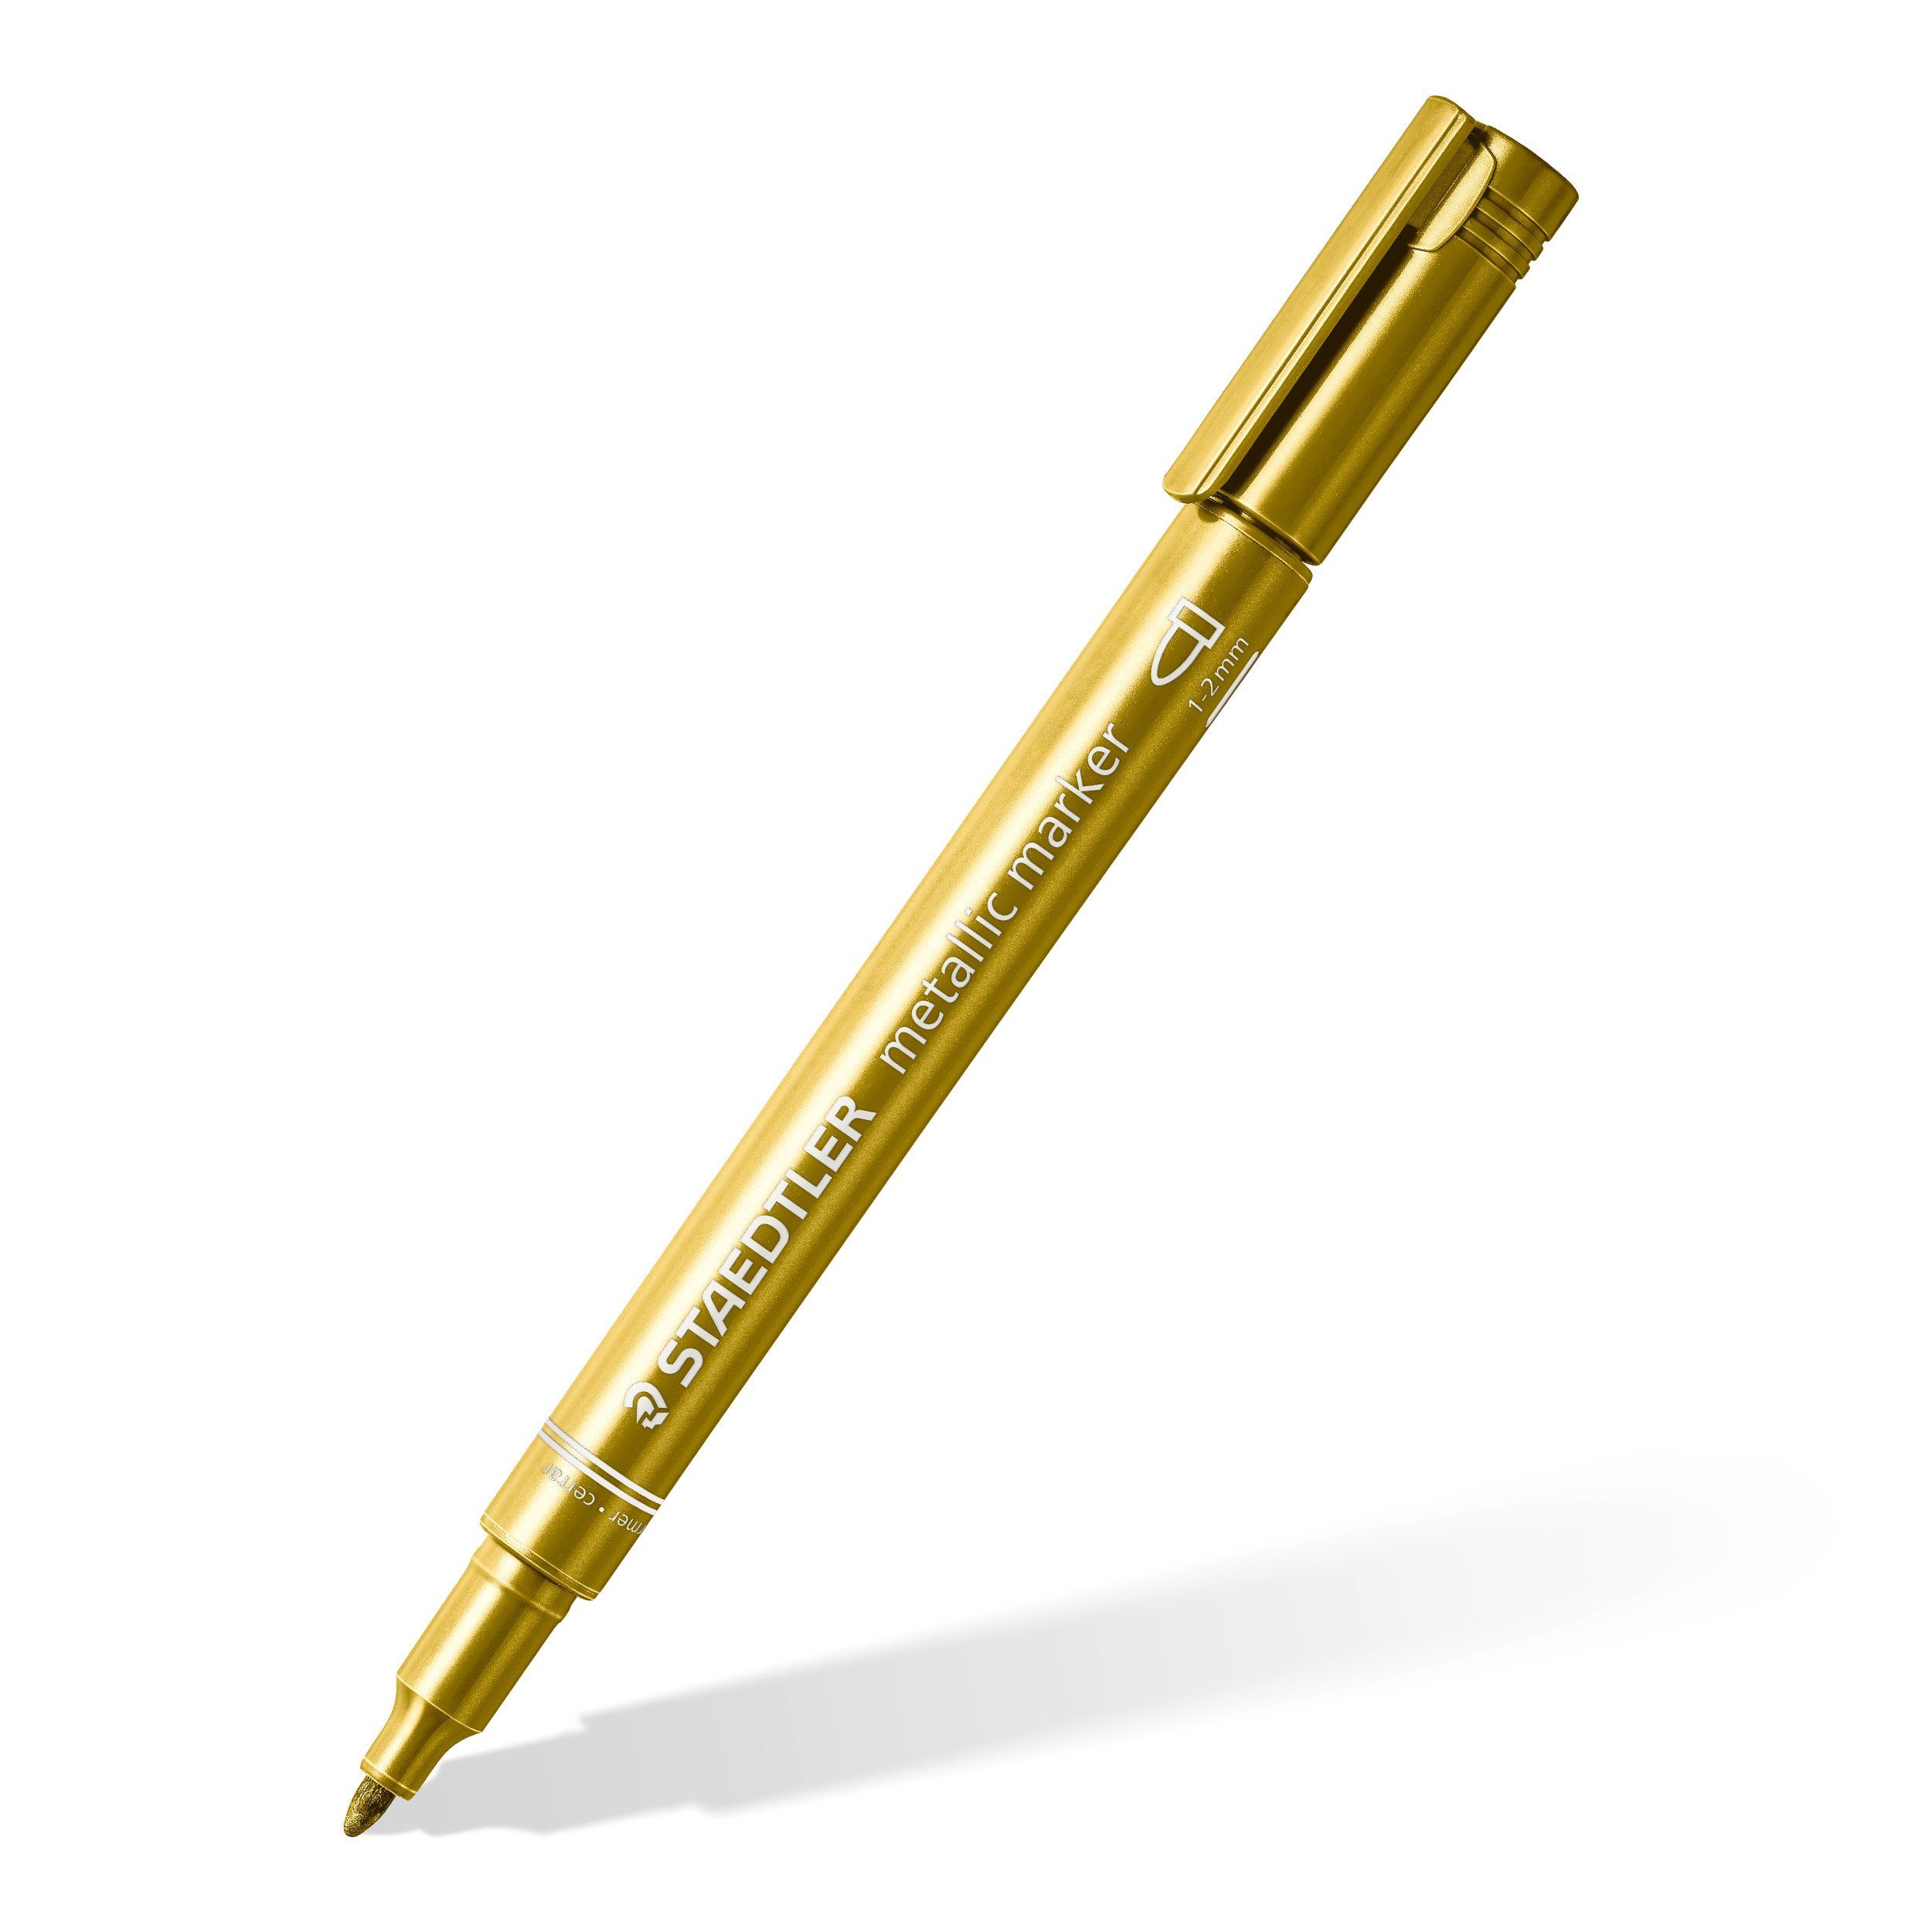 Marker gold STAEDTLER pigmentierte 1-2 8323-11 mm Layoutmarker, Tinte Lackmarker pen metallic